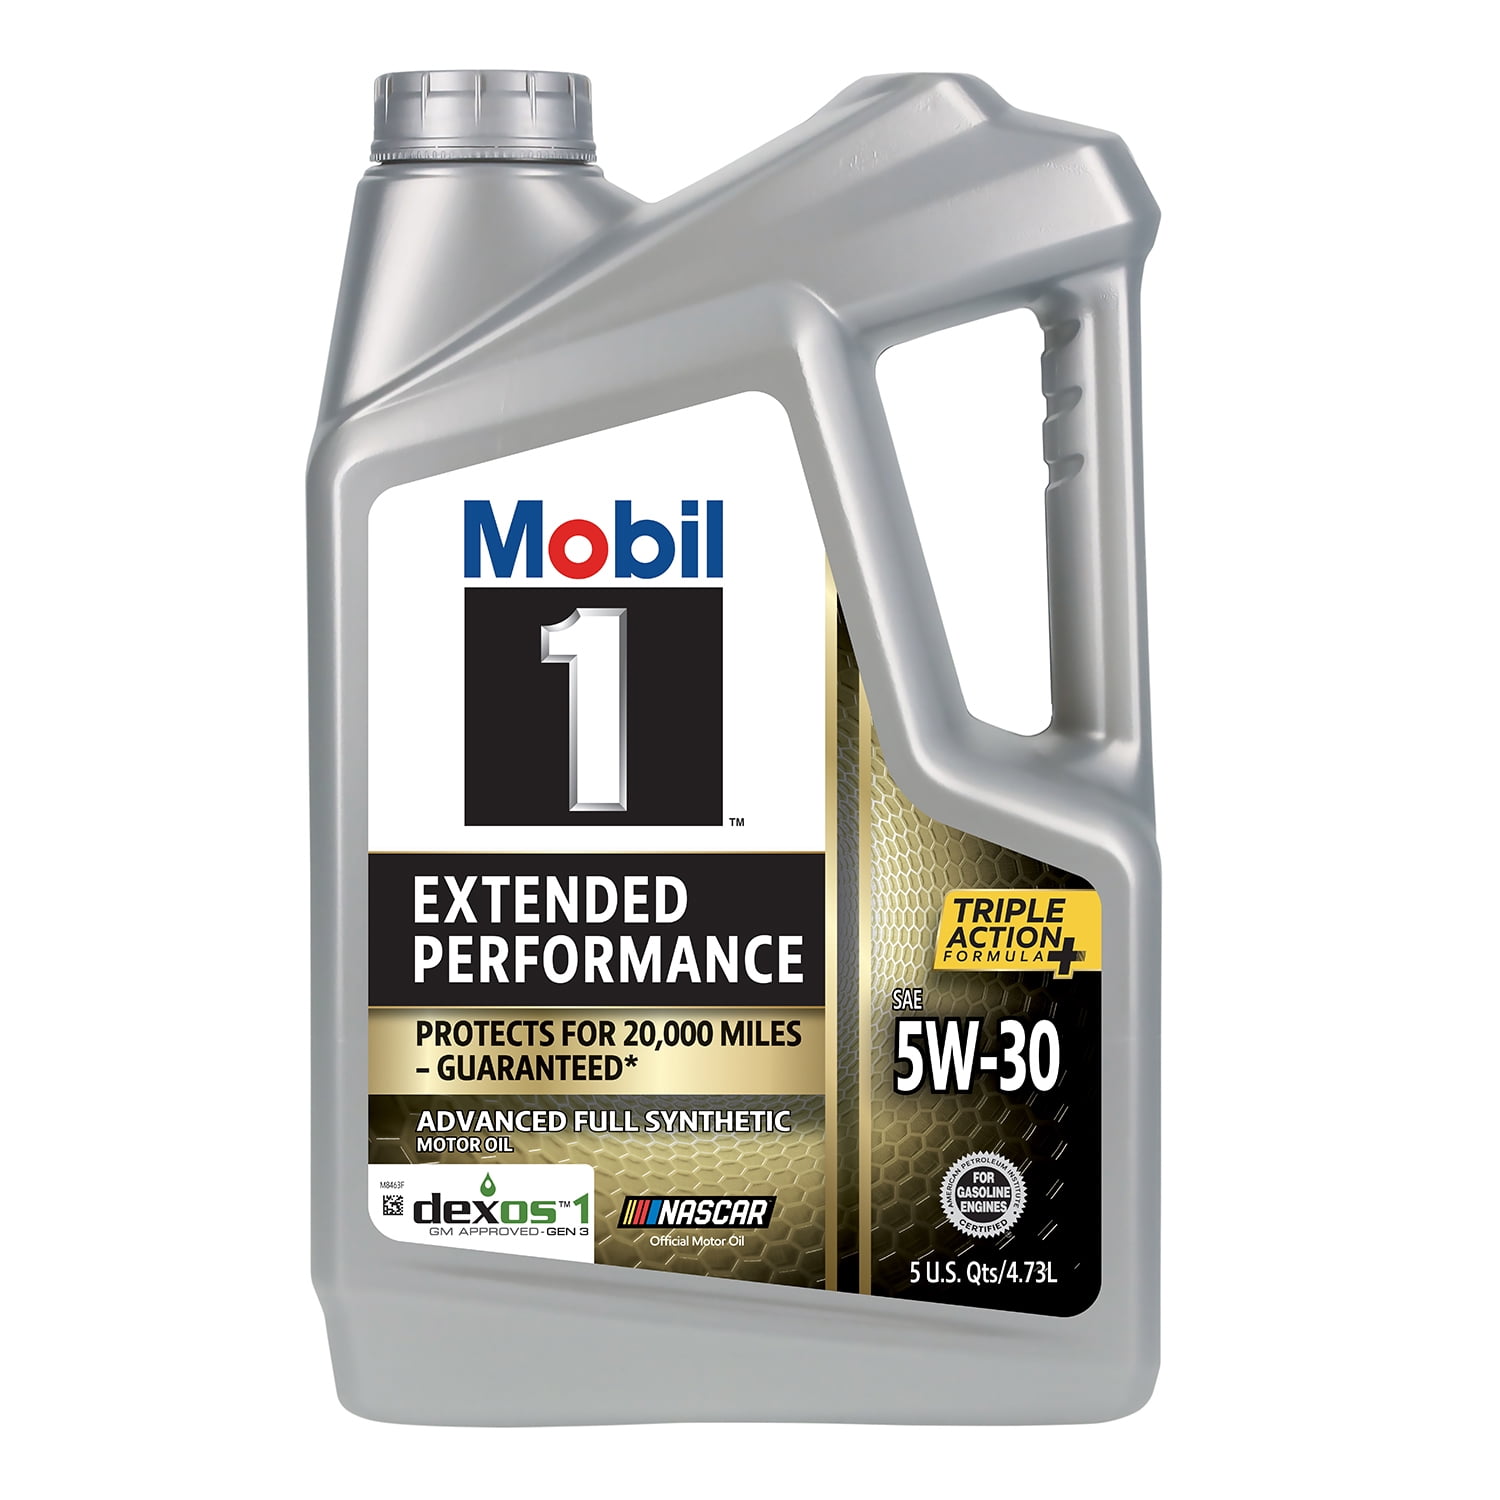 Mobil 1 Extended Performance Full Synthetic Motor Oil 5W-30, 5 qt (3 Pack) - 2